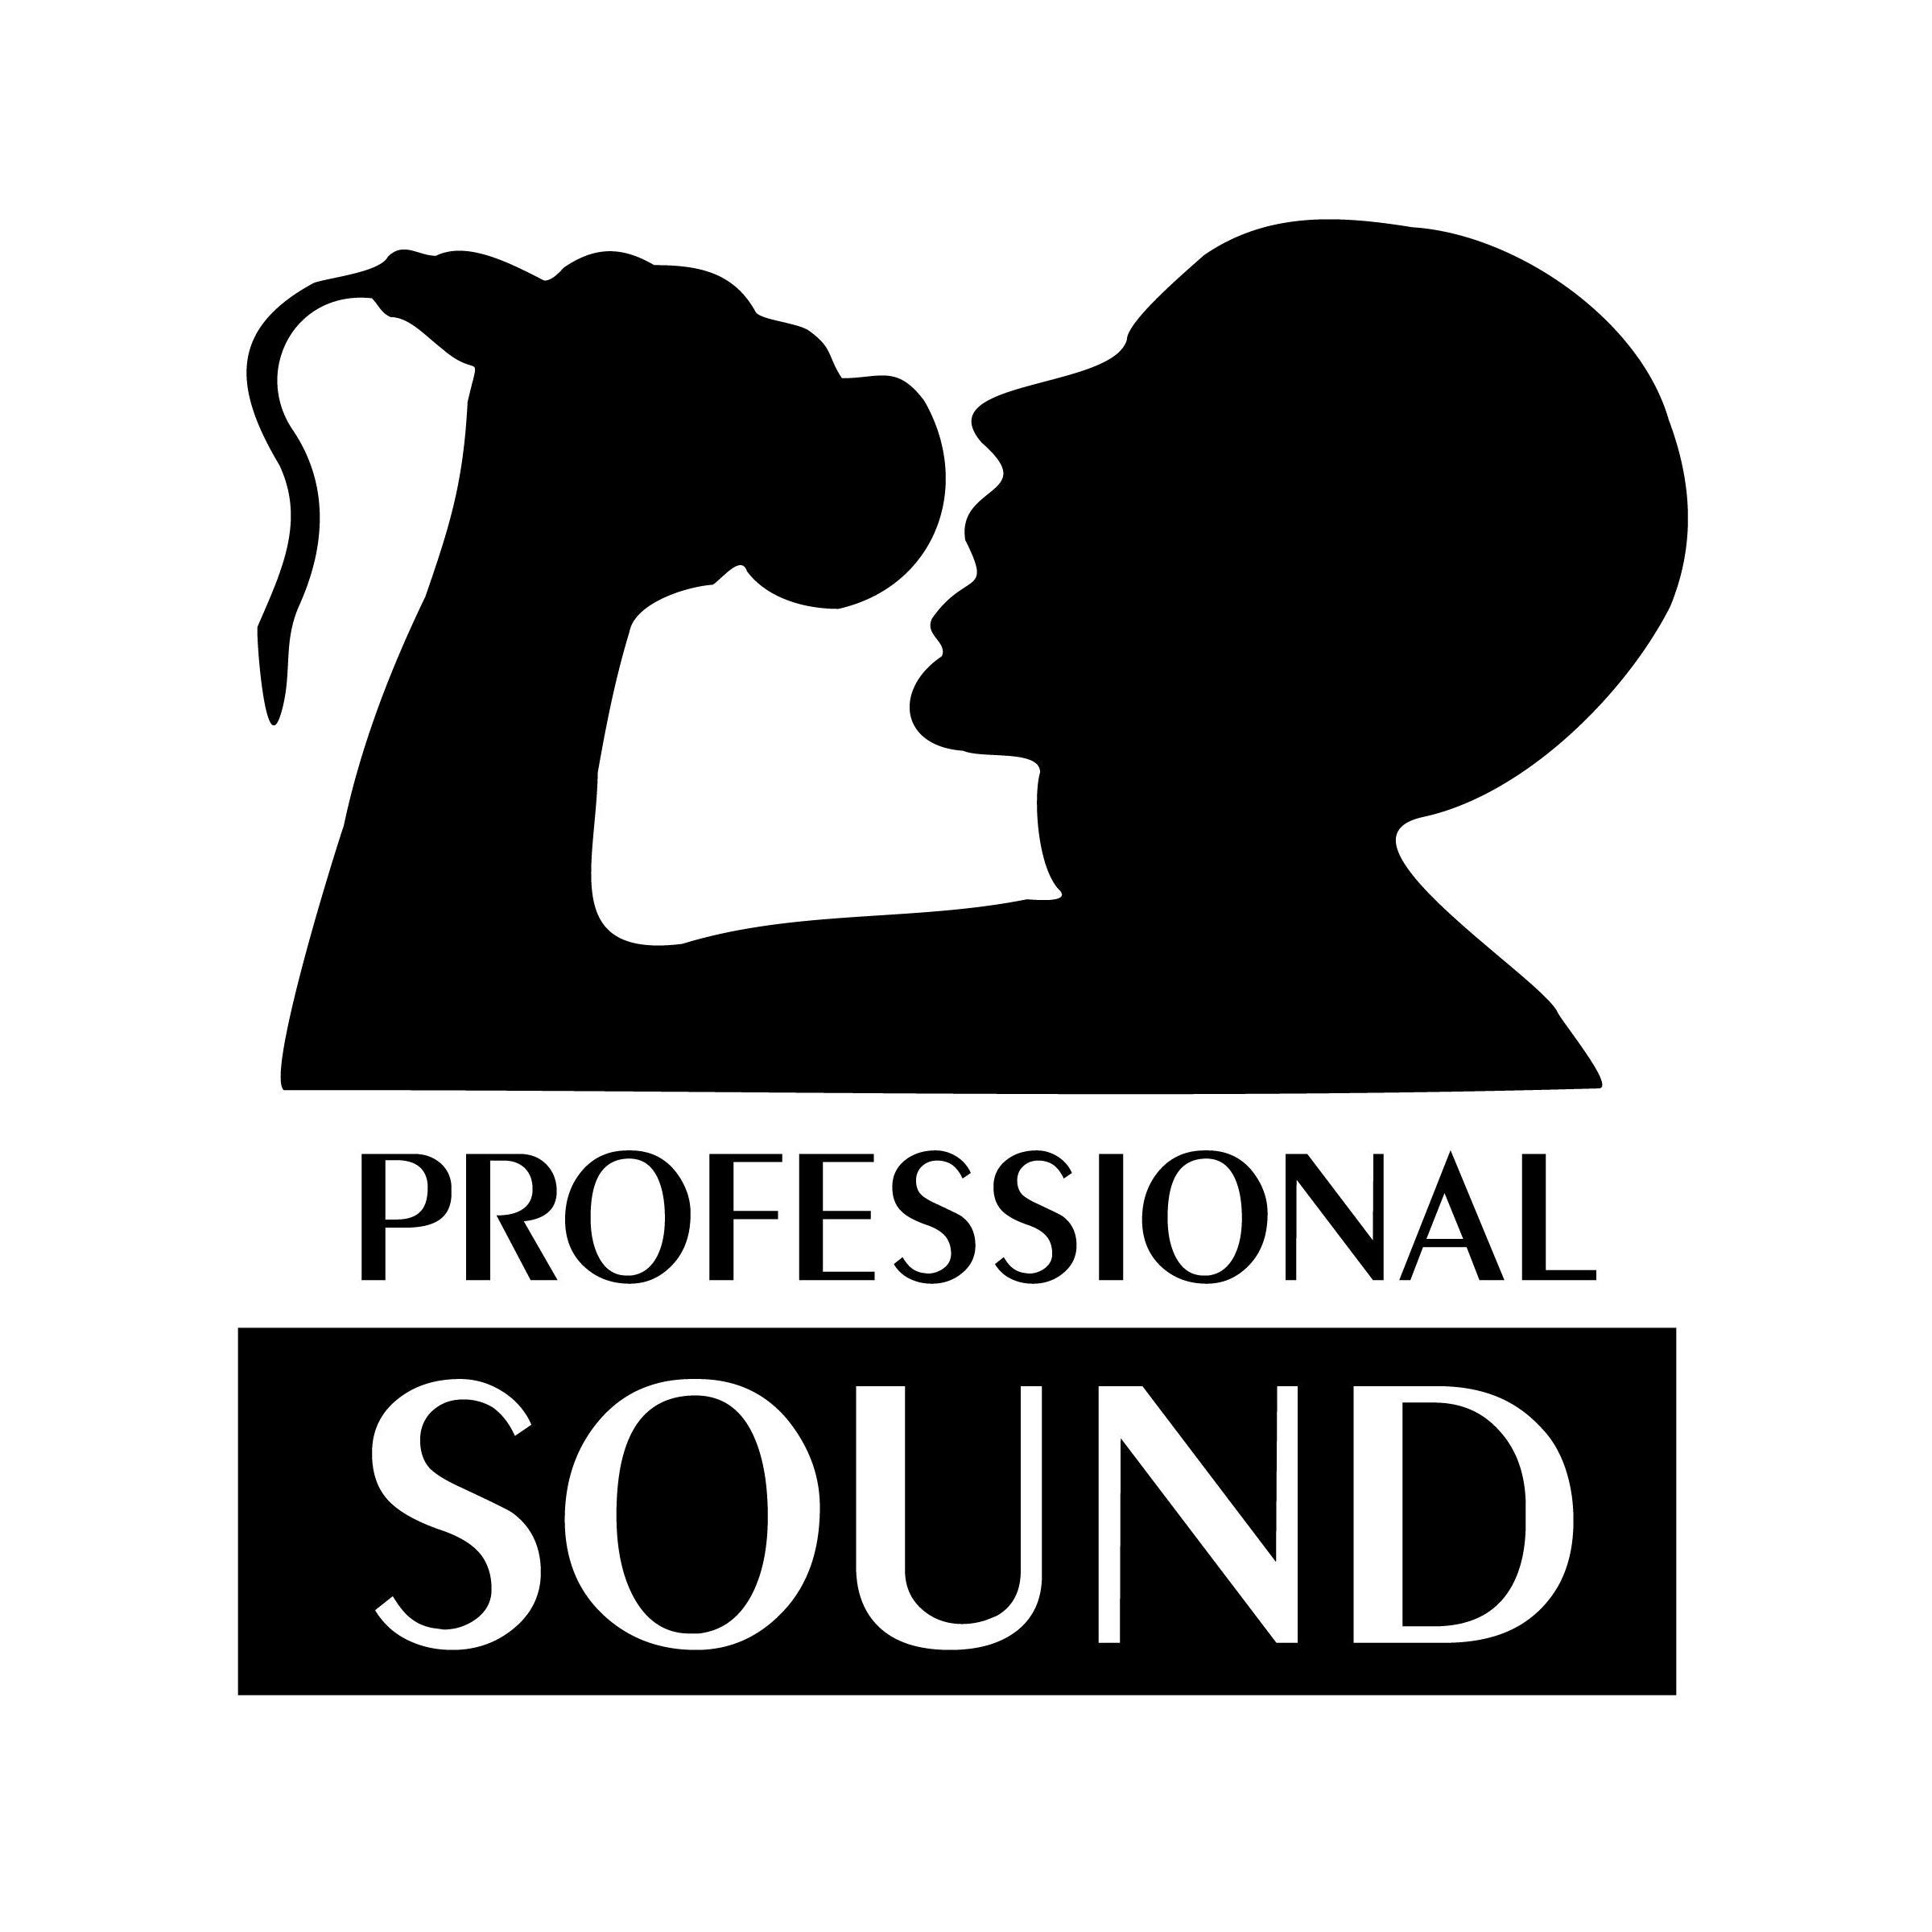 Professional sound